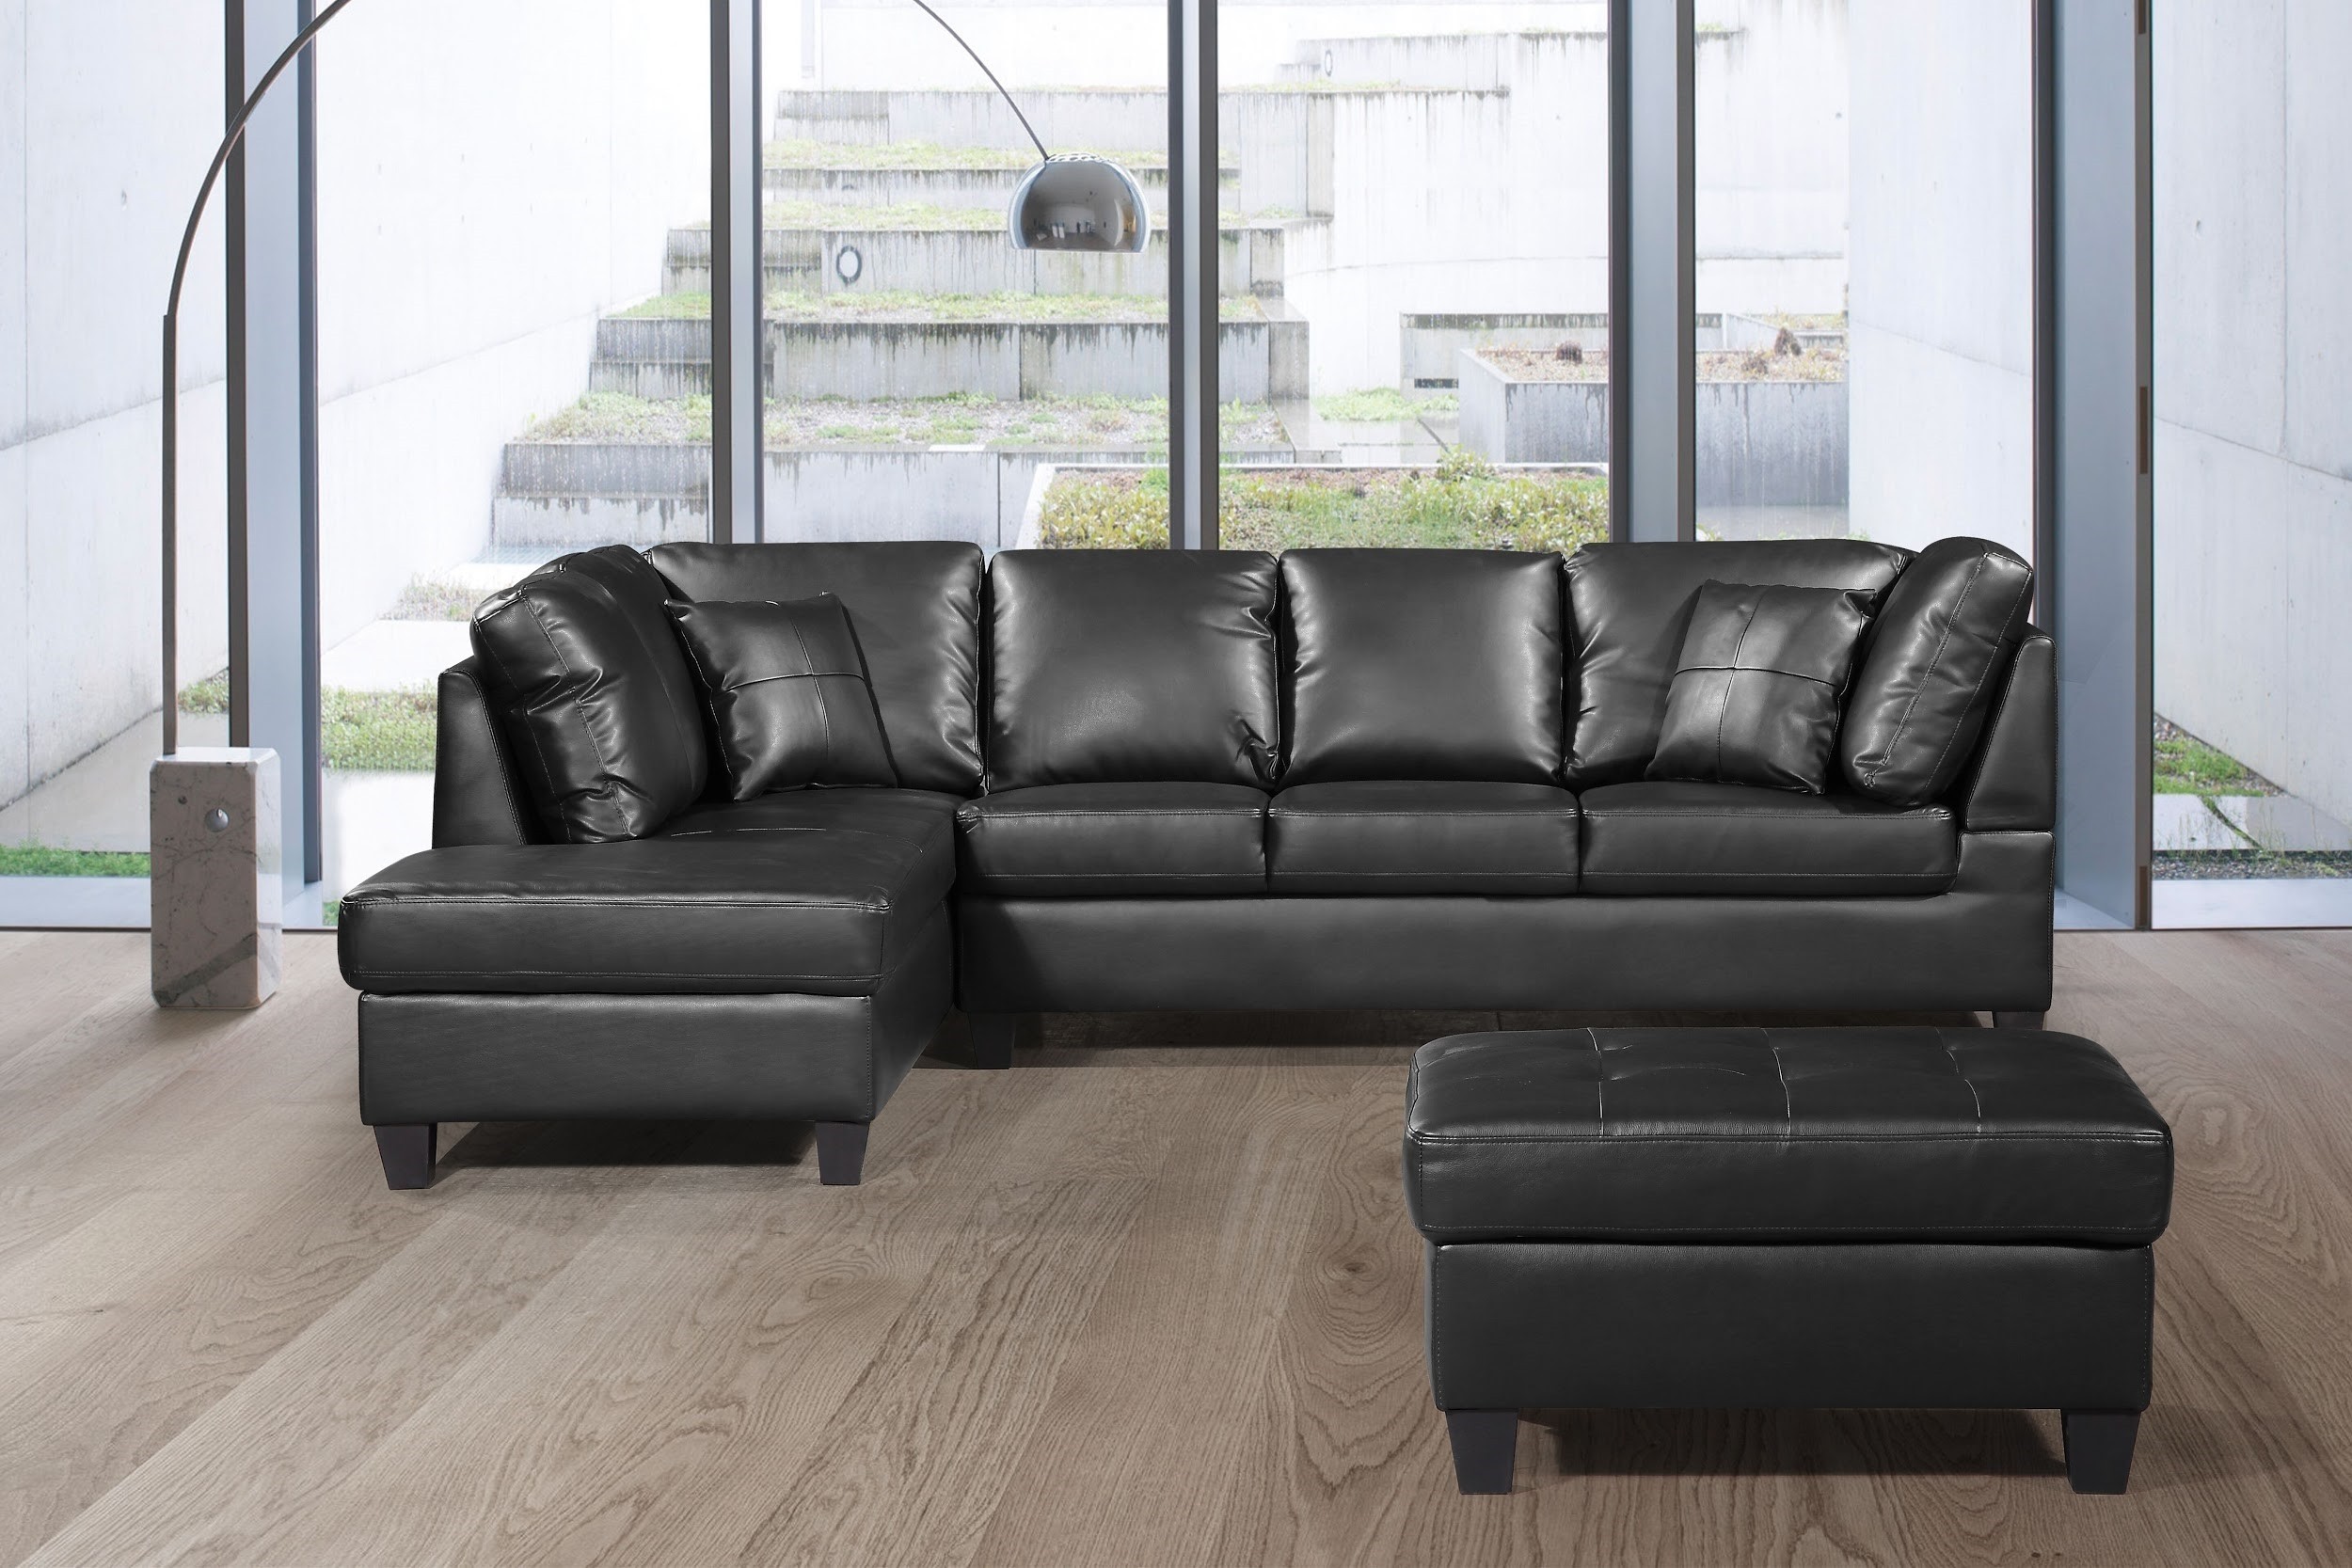 leather sofa with storage ottoman